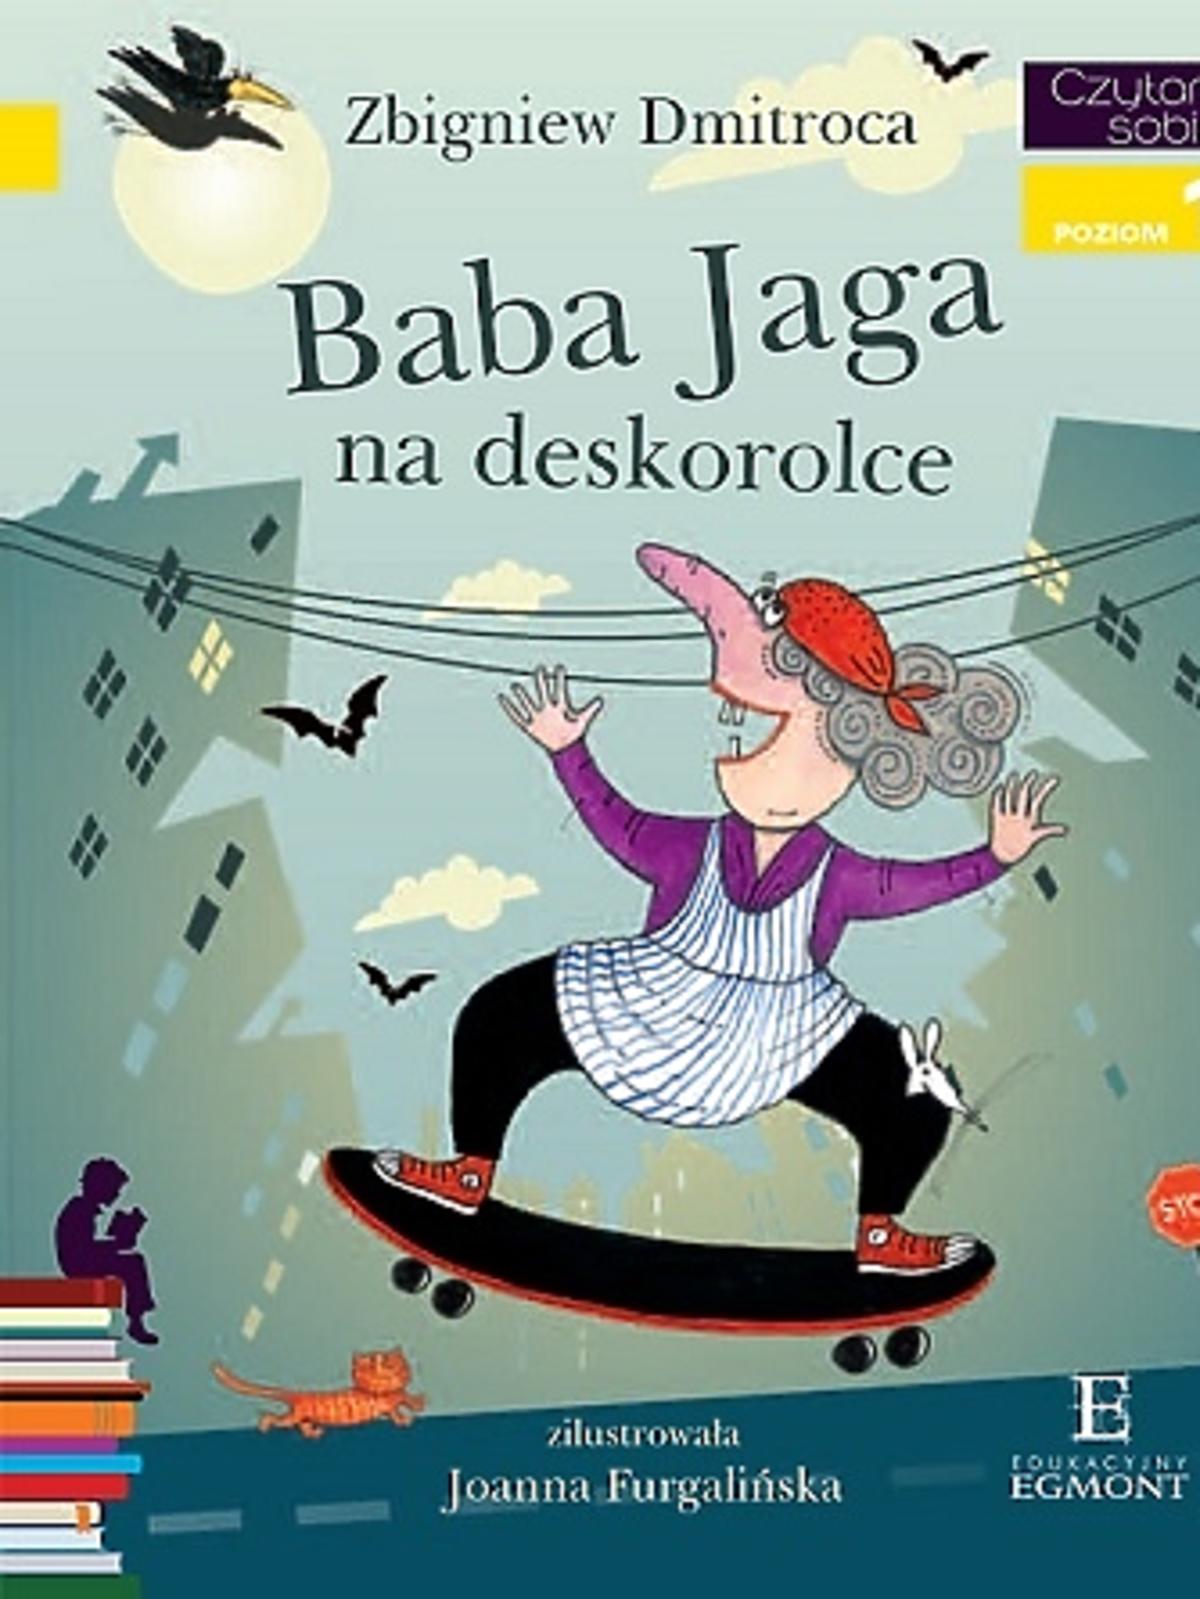 Książka Baba Jaga na deskorolce, Zbigniew Dmitroca